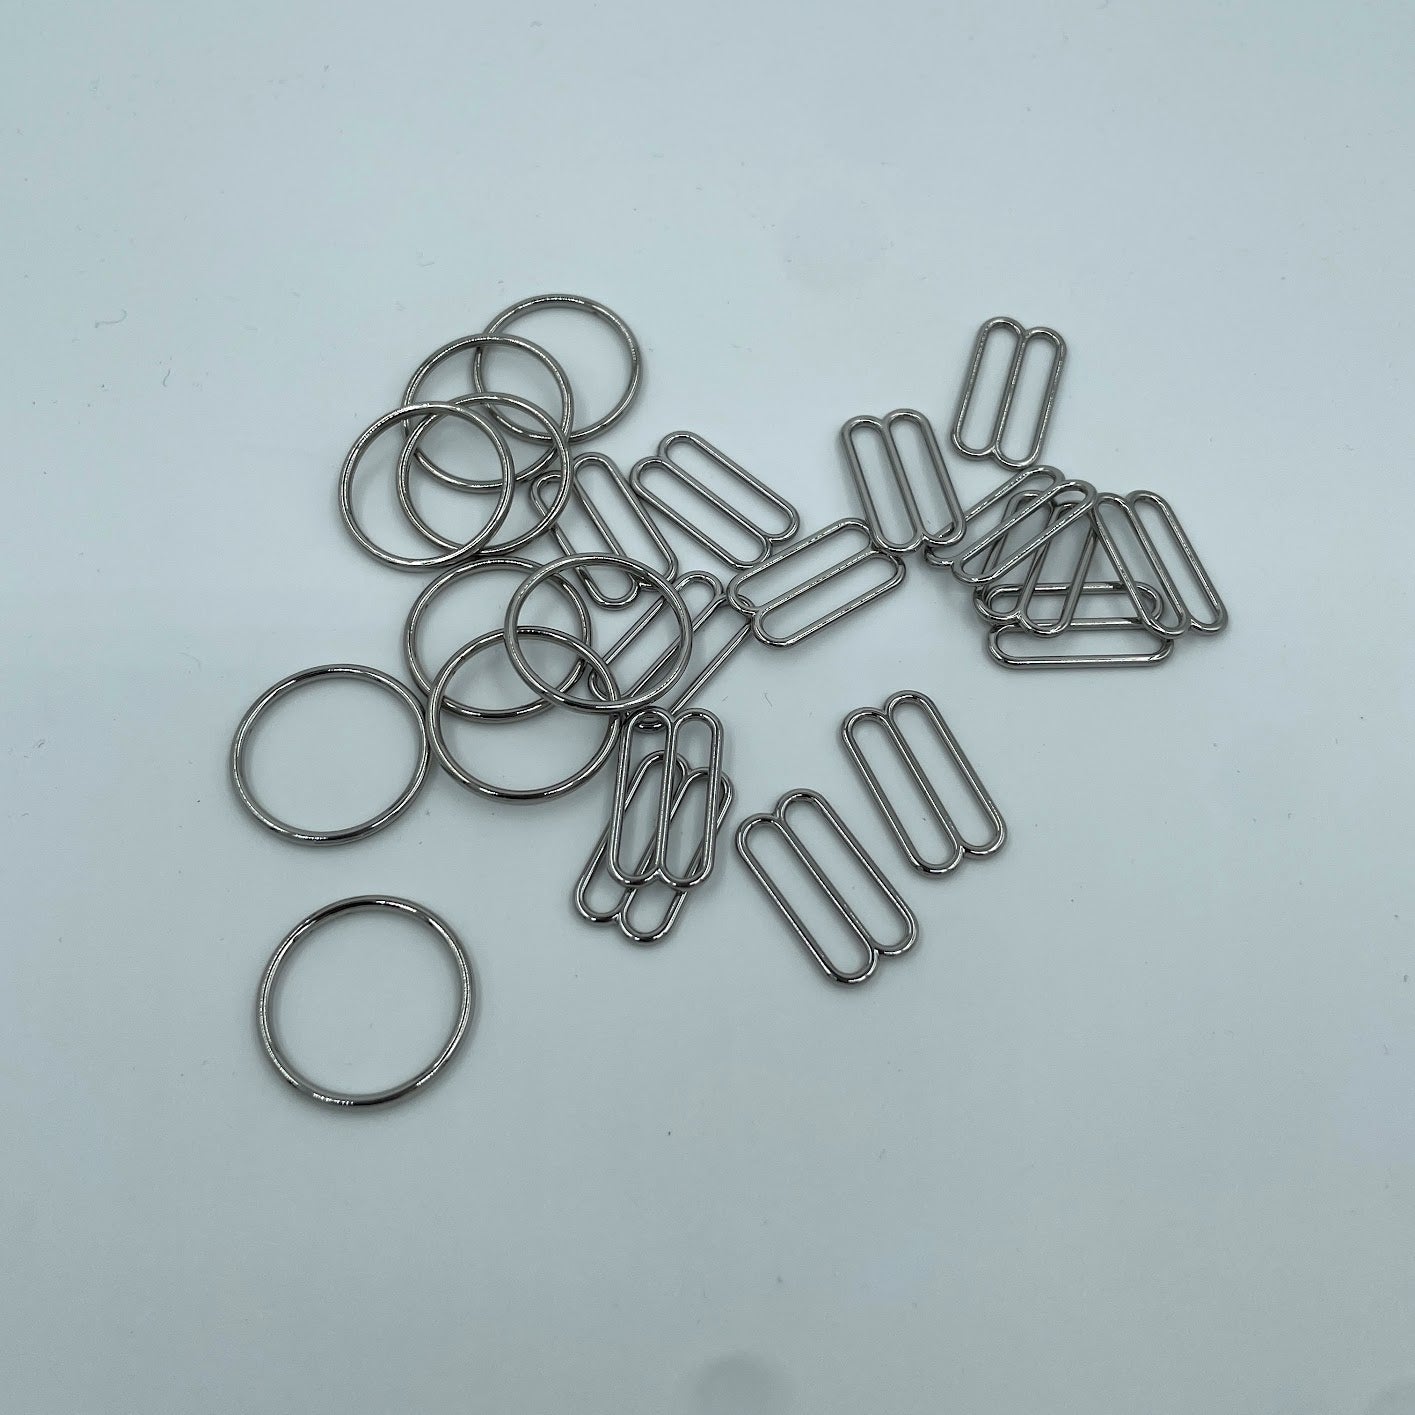 Nickel Rings and Sliders for 20mm Bra Elastic - per Pair